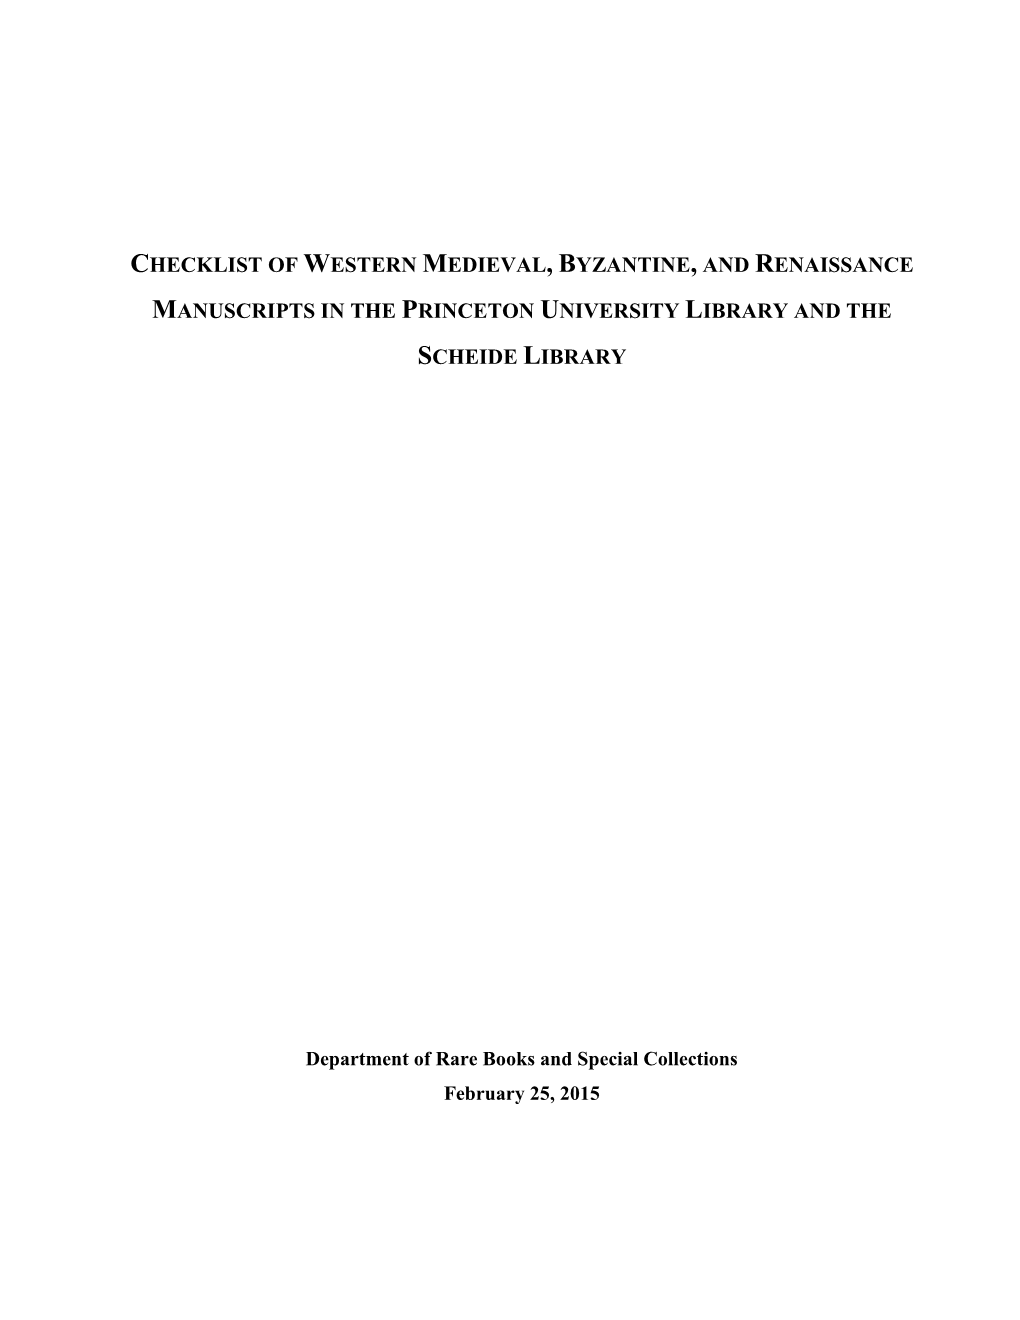 Checklist of Western Medieval, Byzantine, and Renaissance Manuscripts